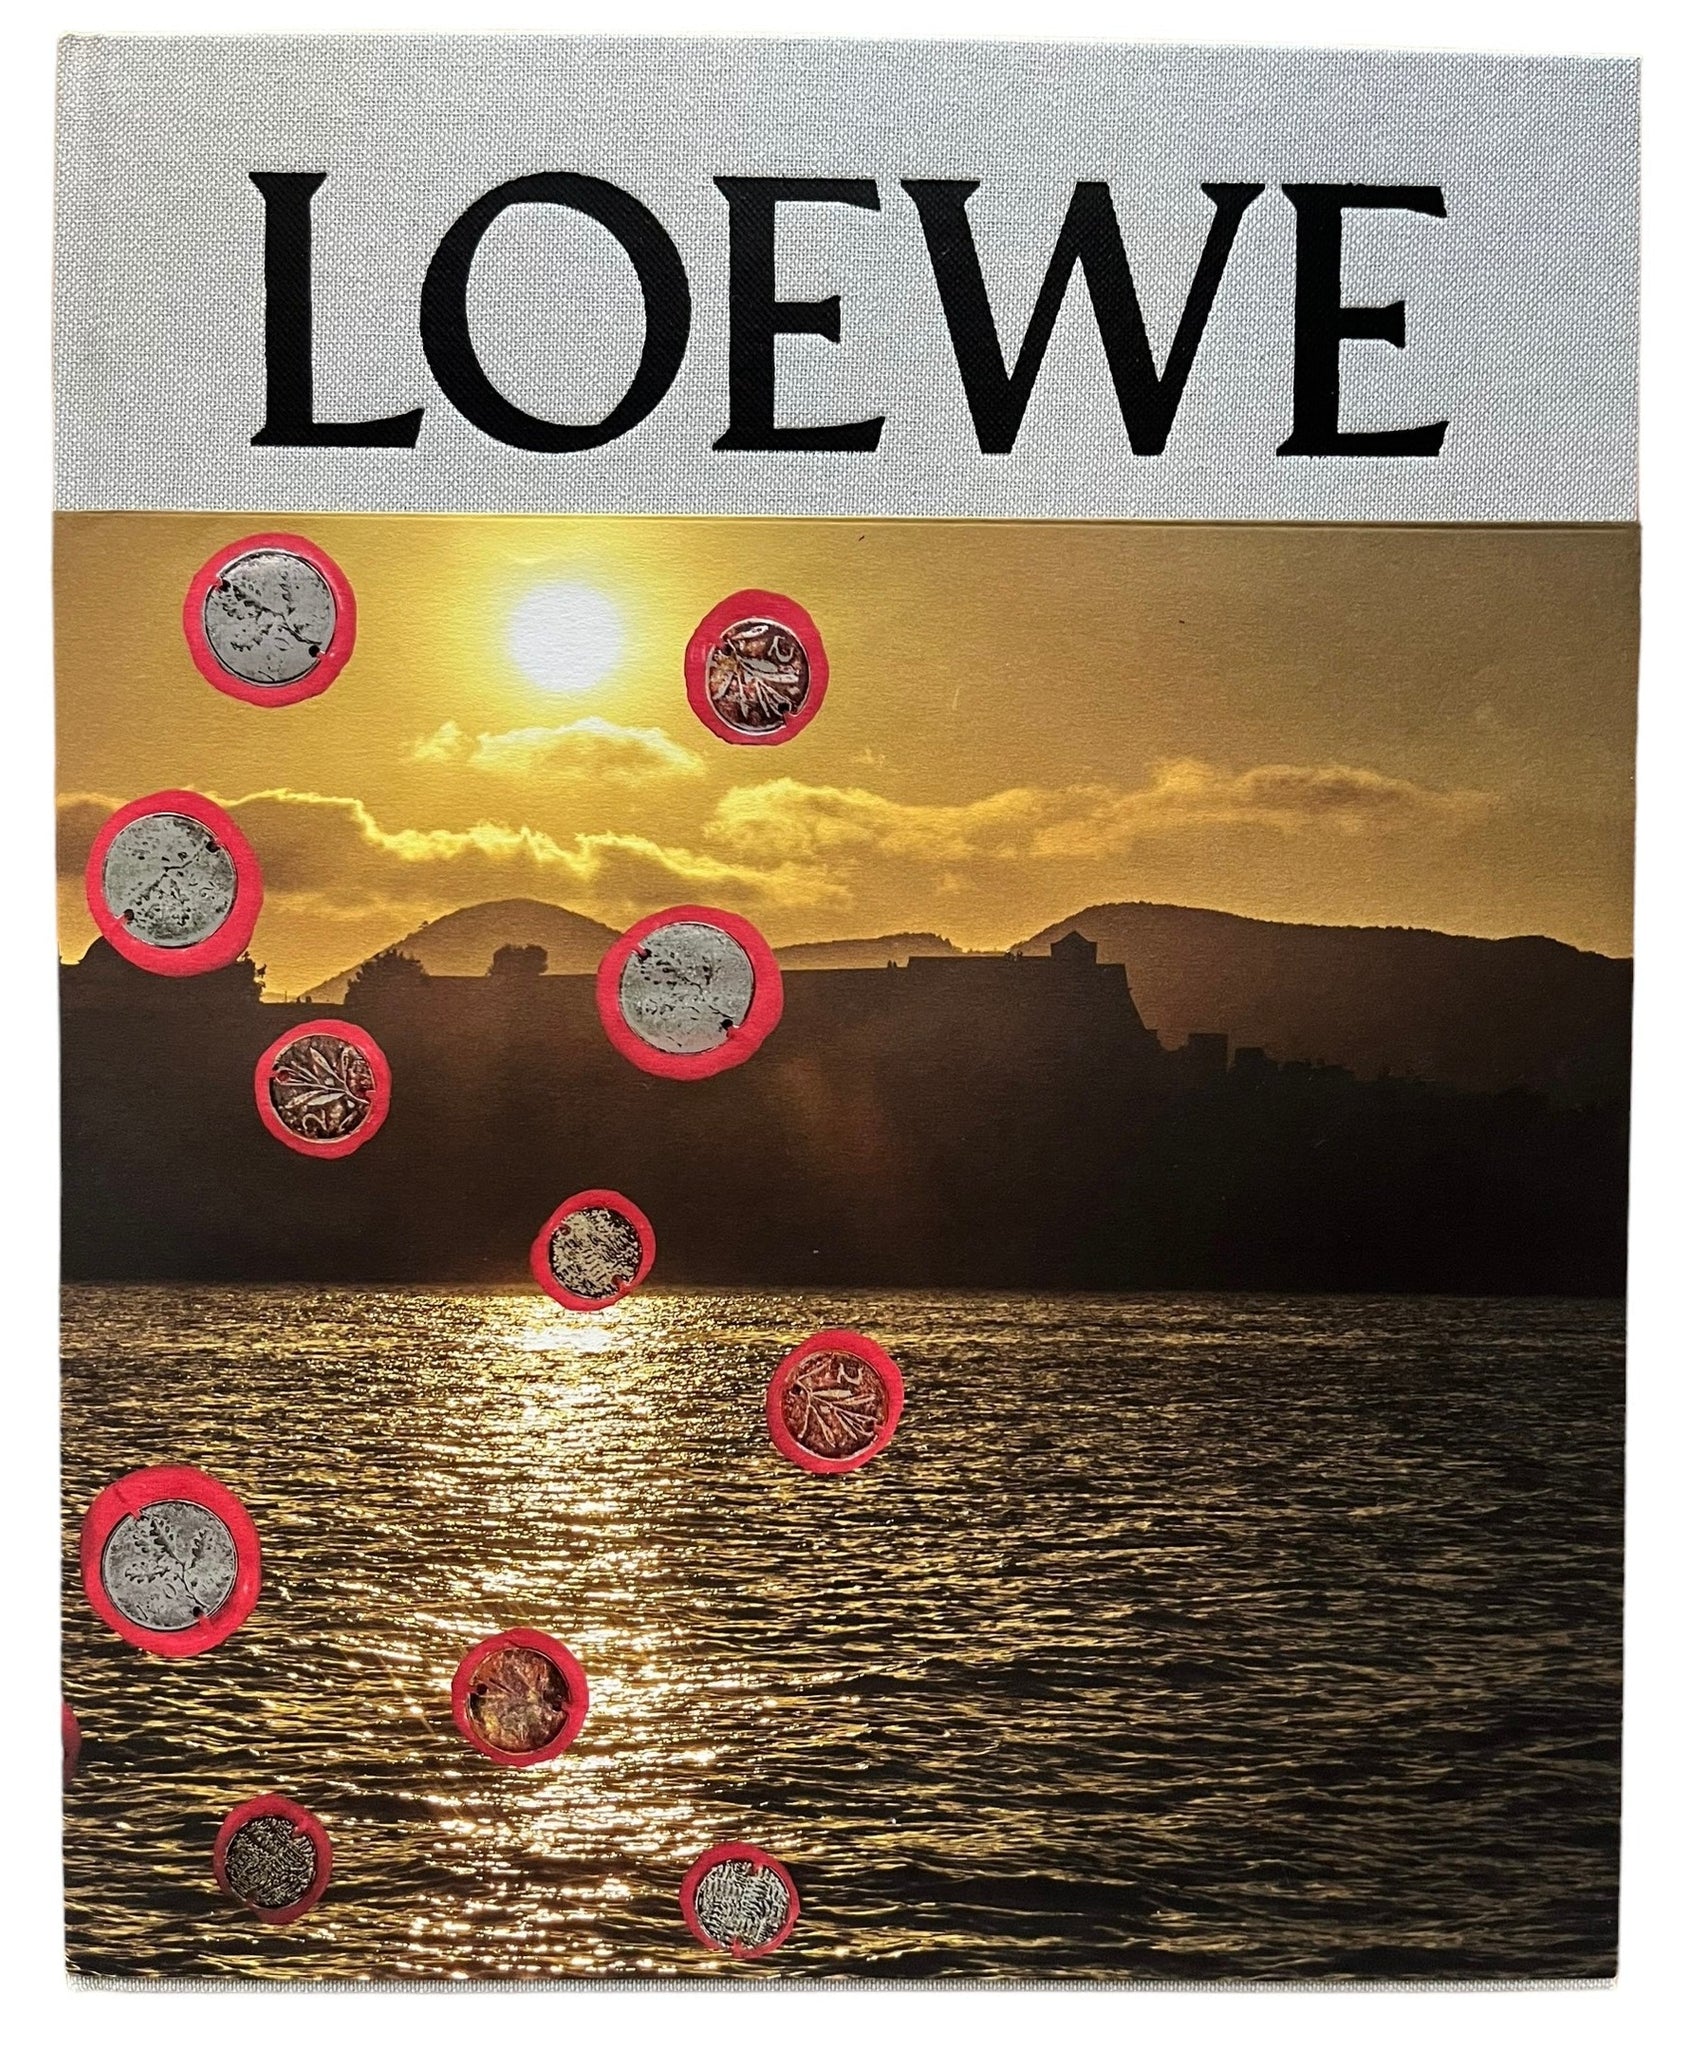 Loewe SS17 Book